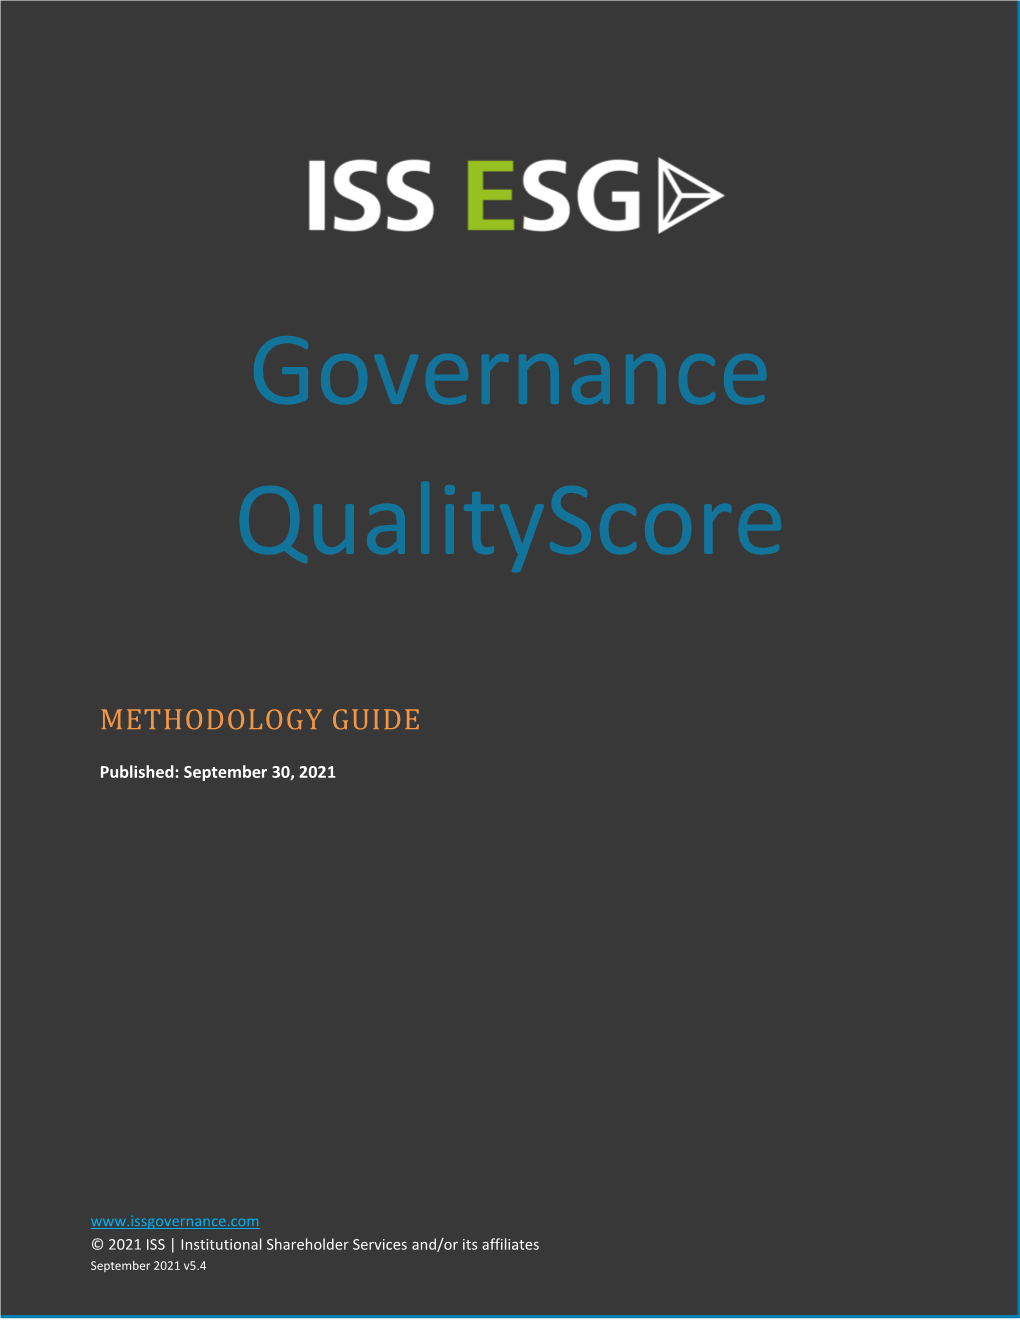 Governance Qualityscore